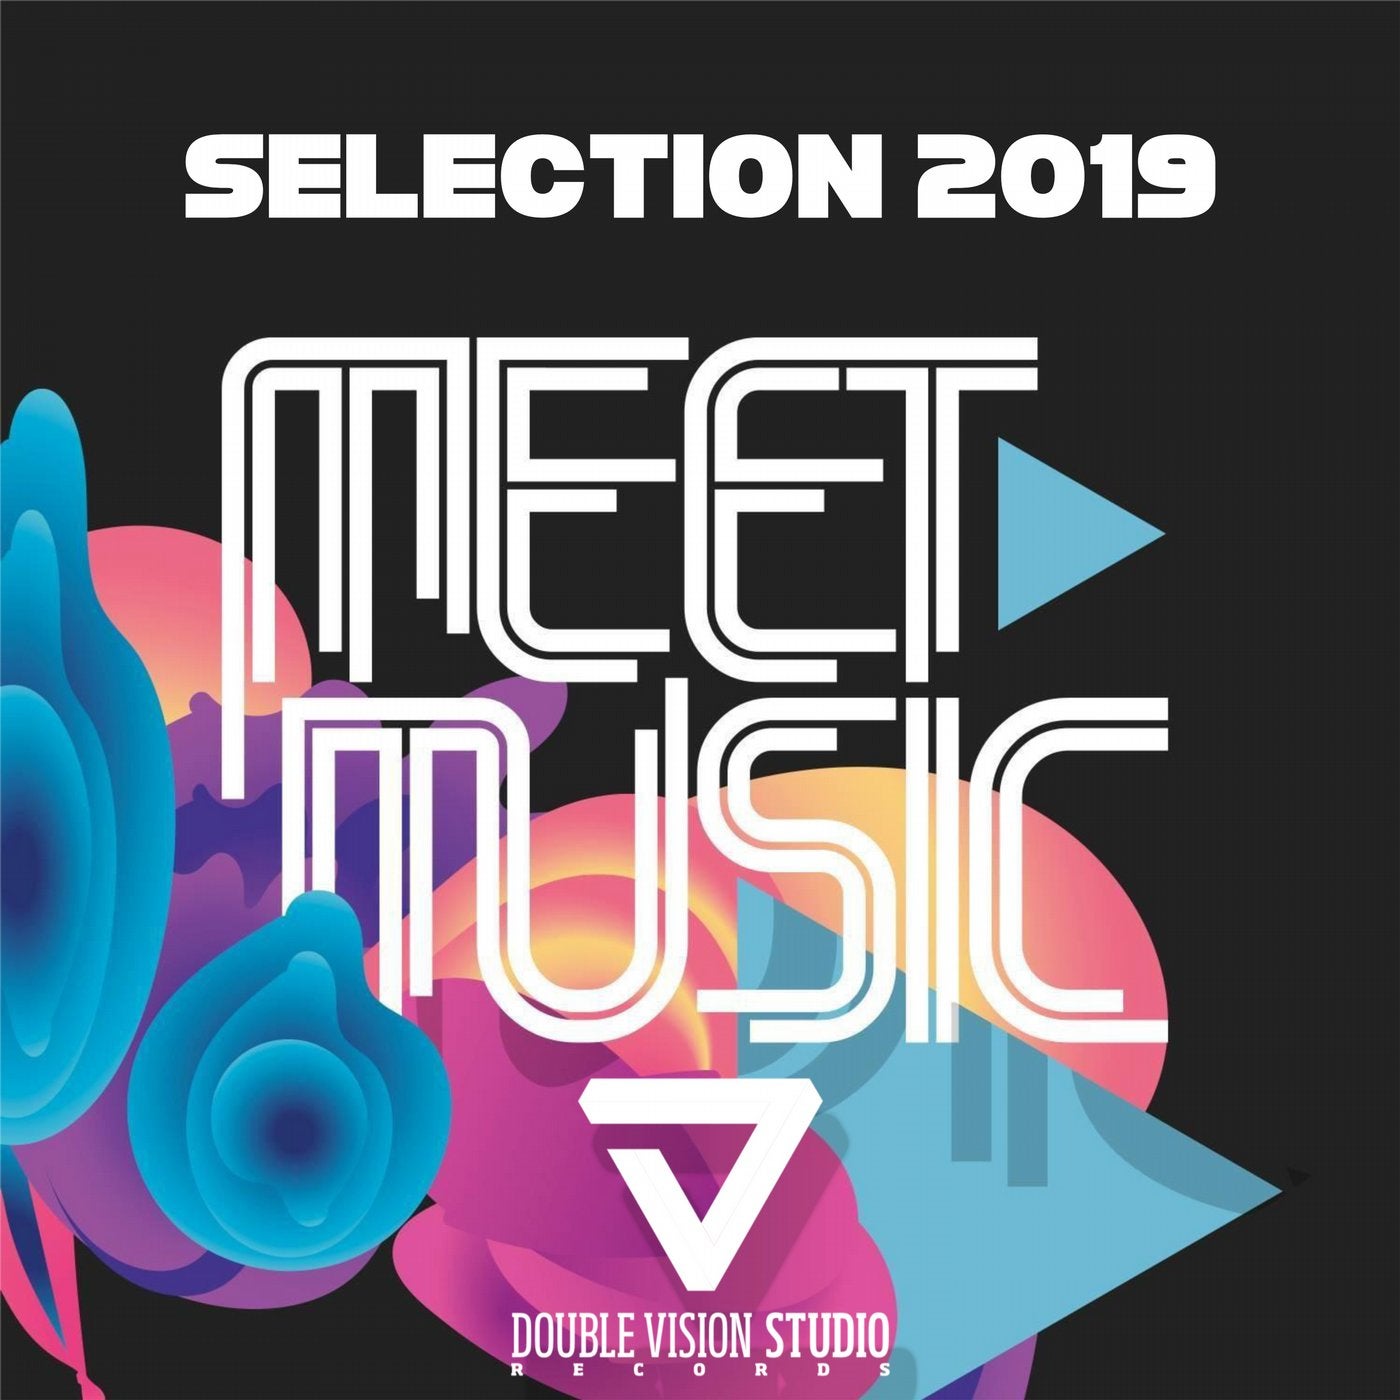 Meet Music Selection 2019